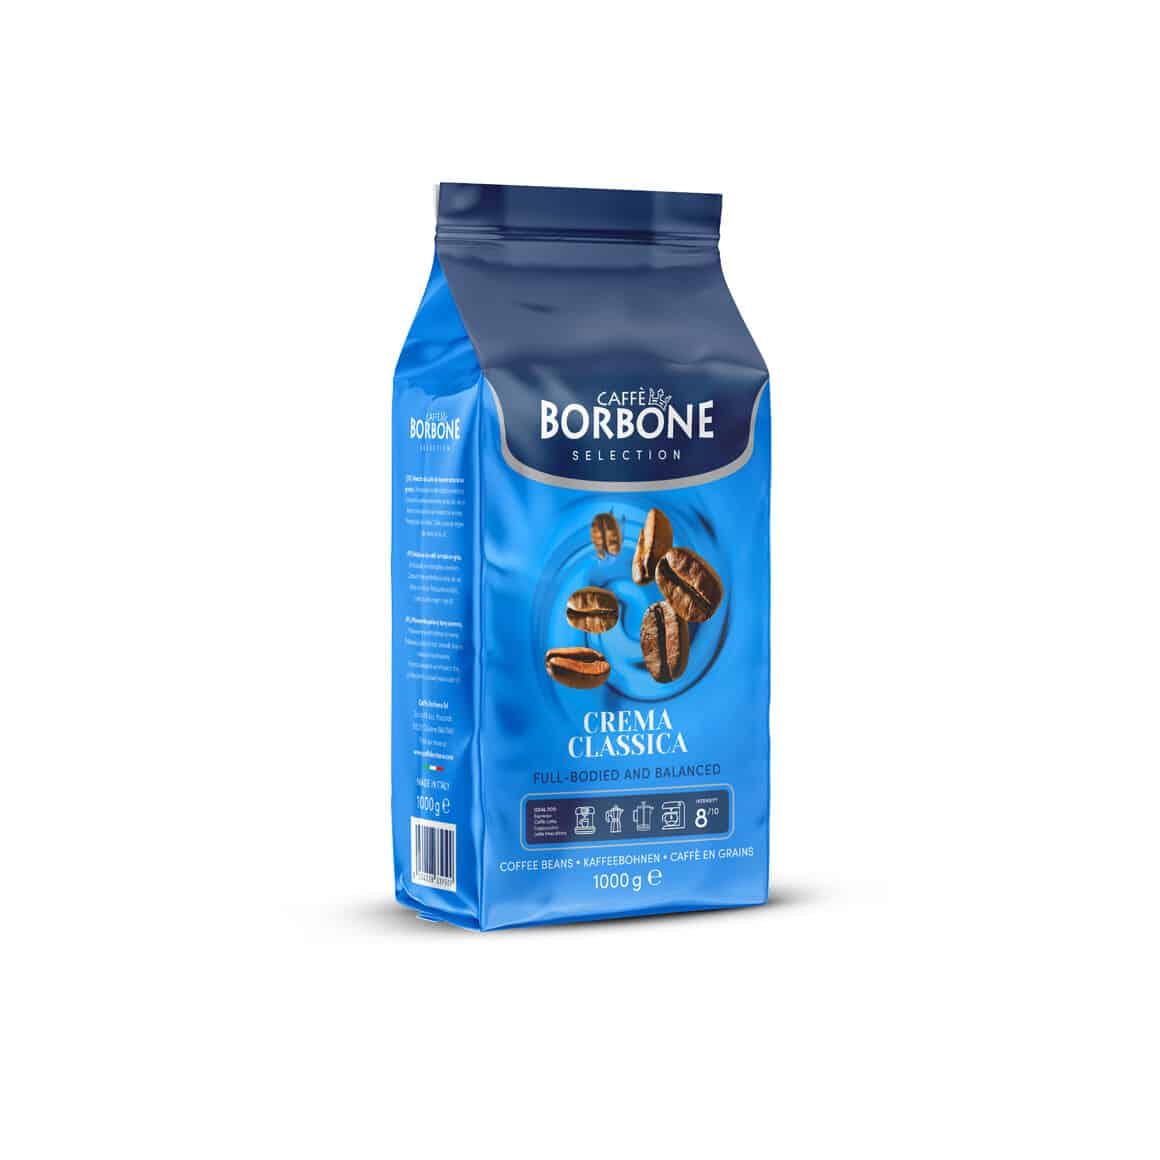 Borbone kohvioad Crema Classica, 1kg (6)